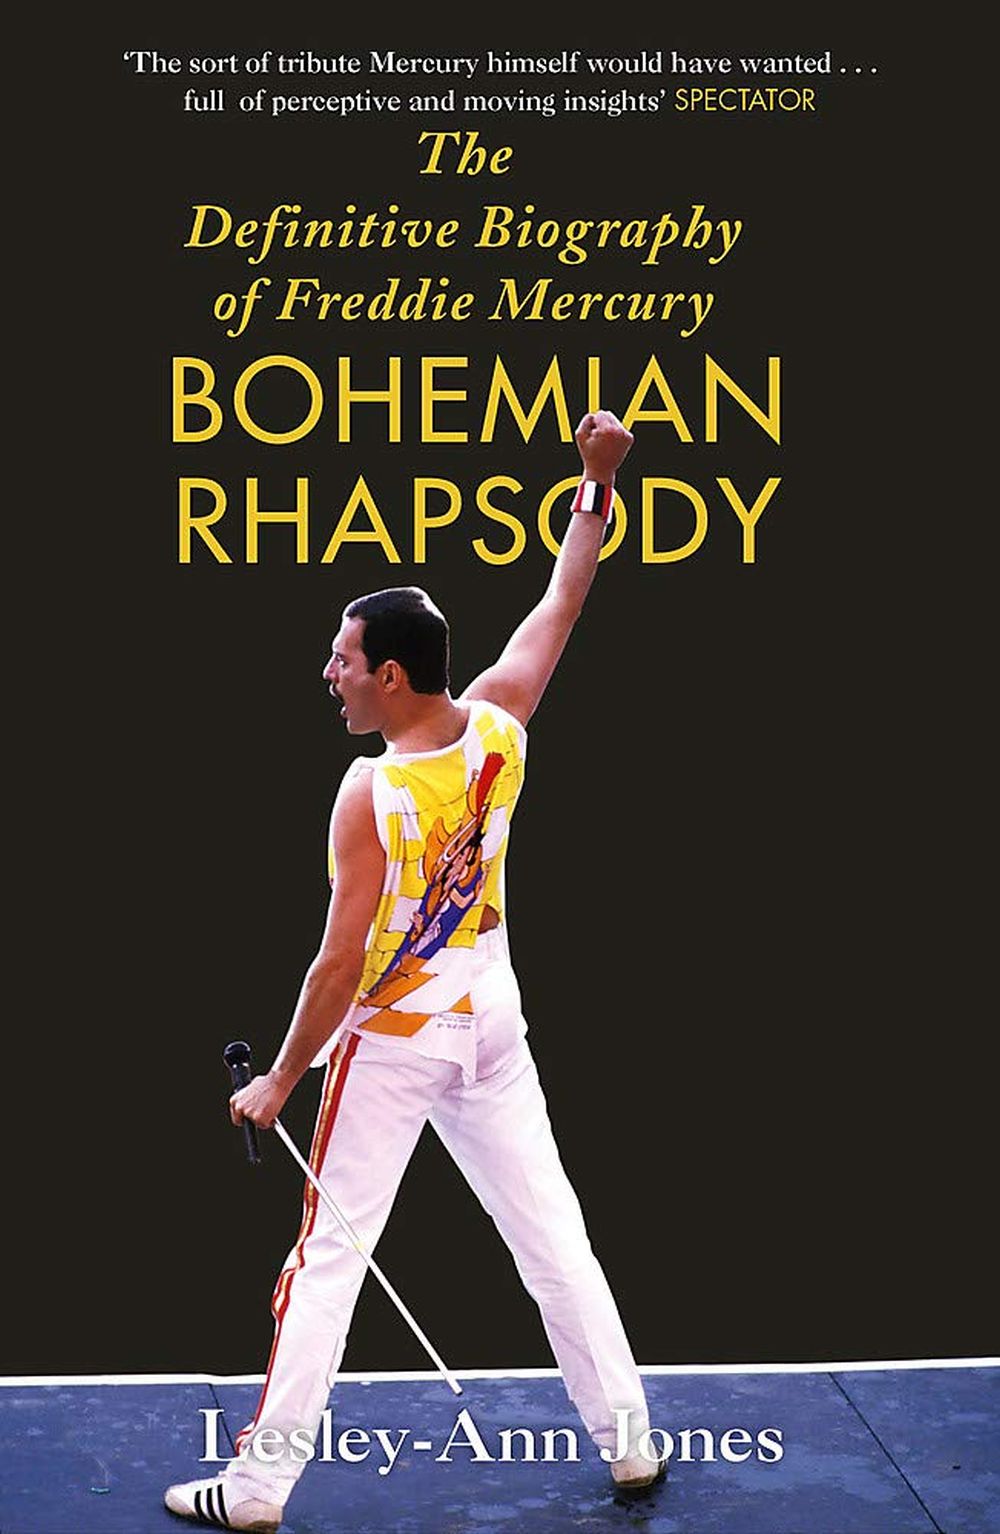 Mercury, Freddie - Jones, Lesley-Ann - Bohemian Rhapsody: The Definitive Biography Of Freddie Mercury - Book - New